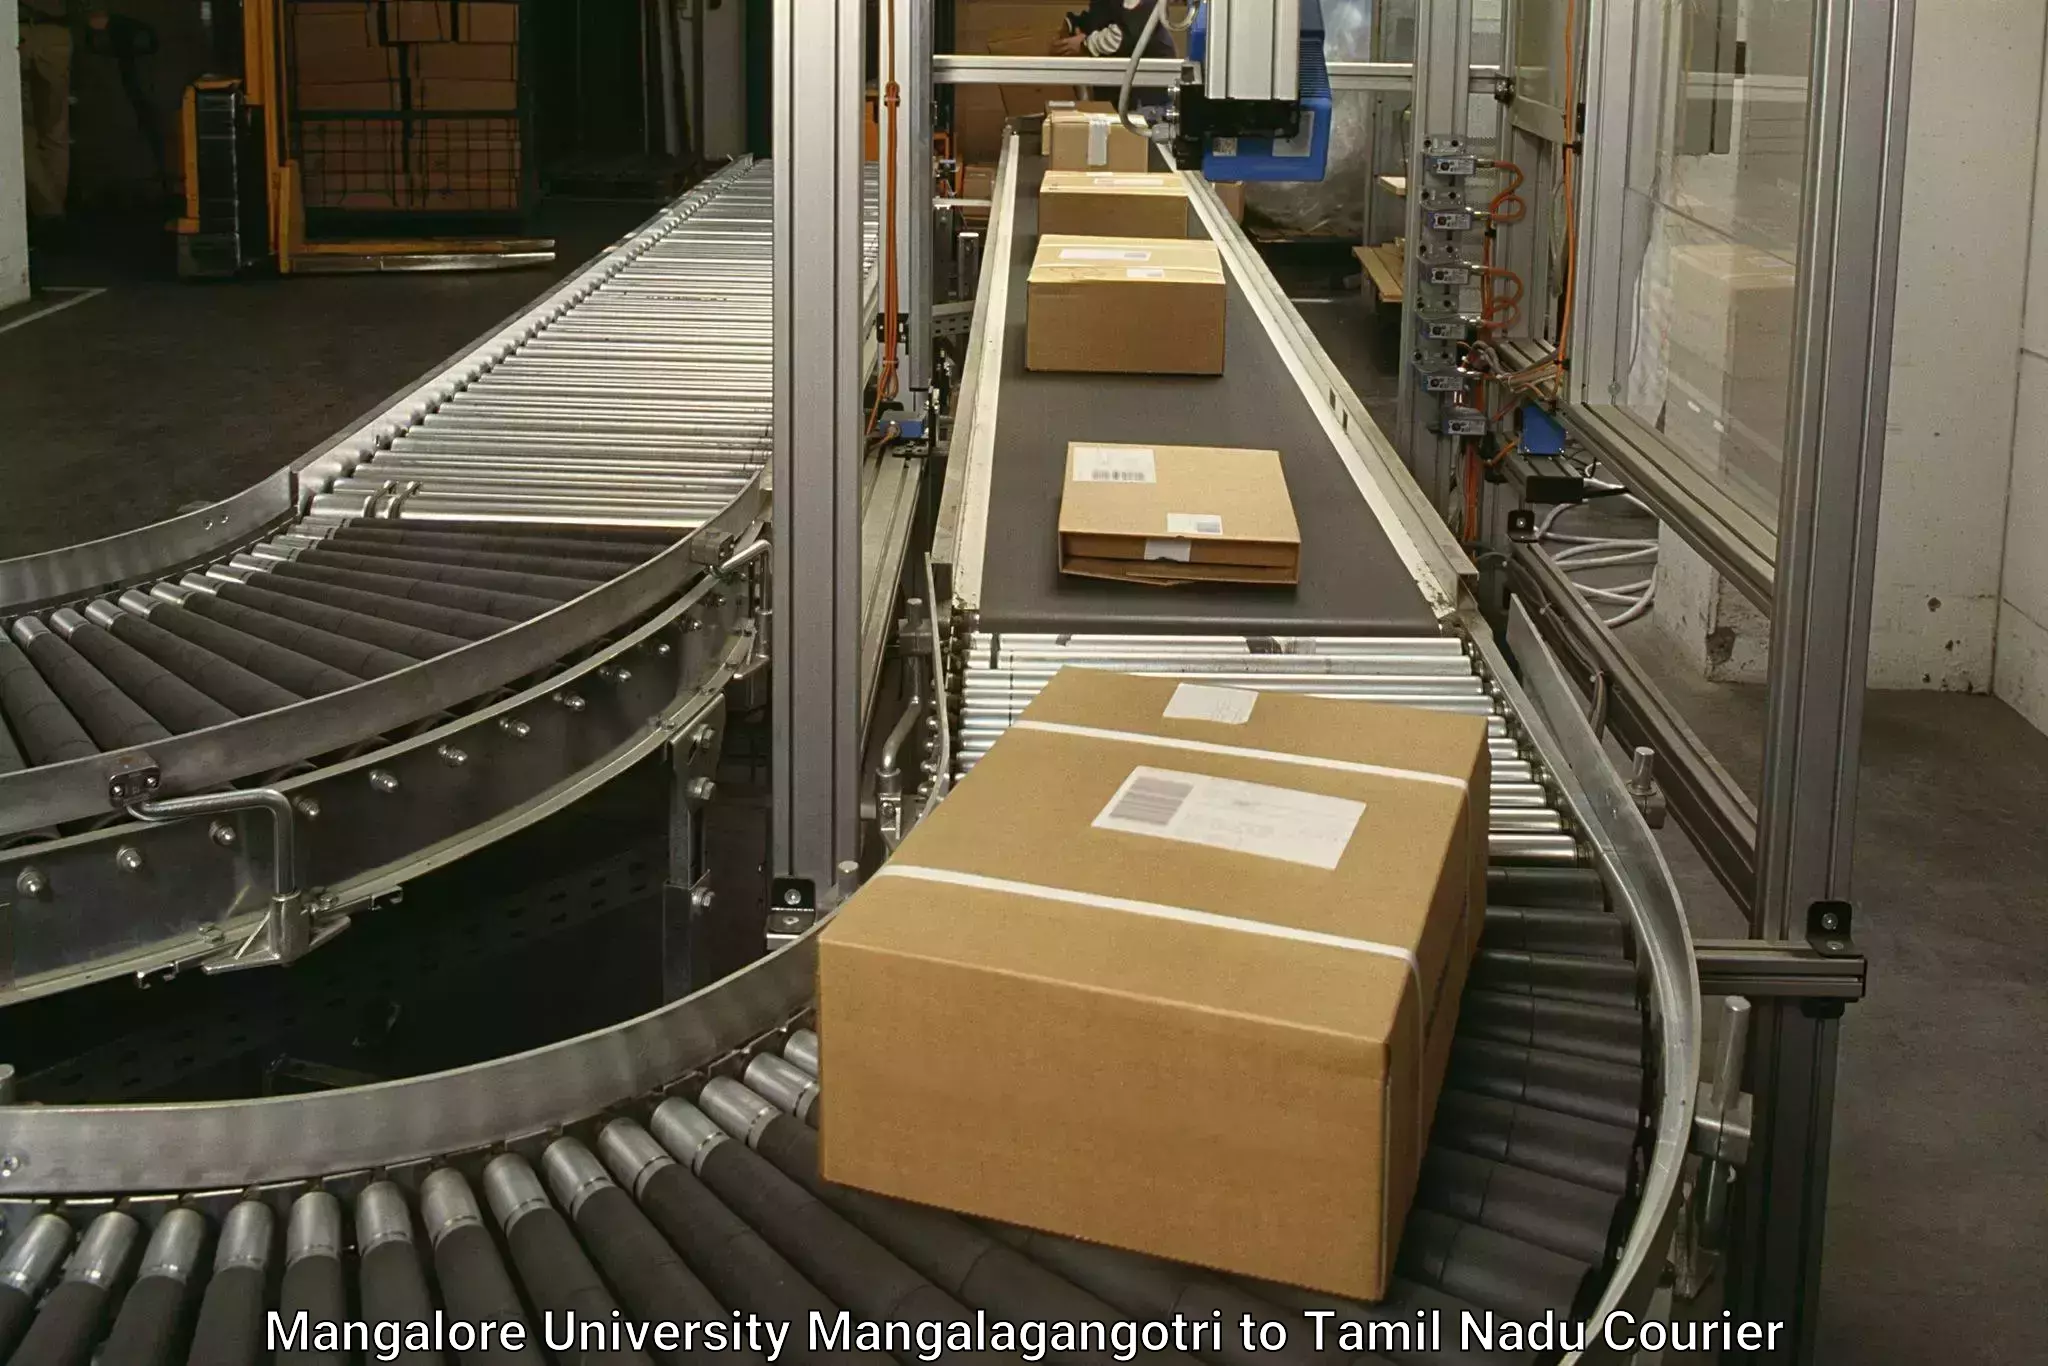 Express delivery capabilities Mangalore University Mangalagangotri to Tamil Nadu